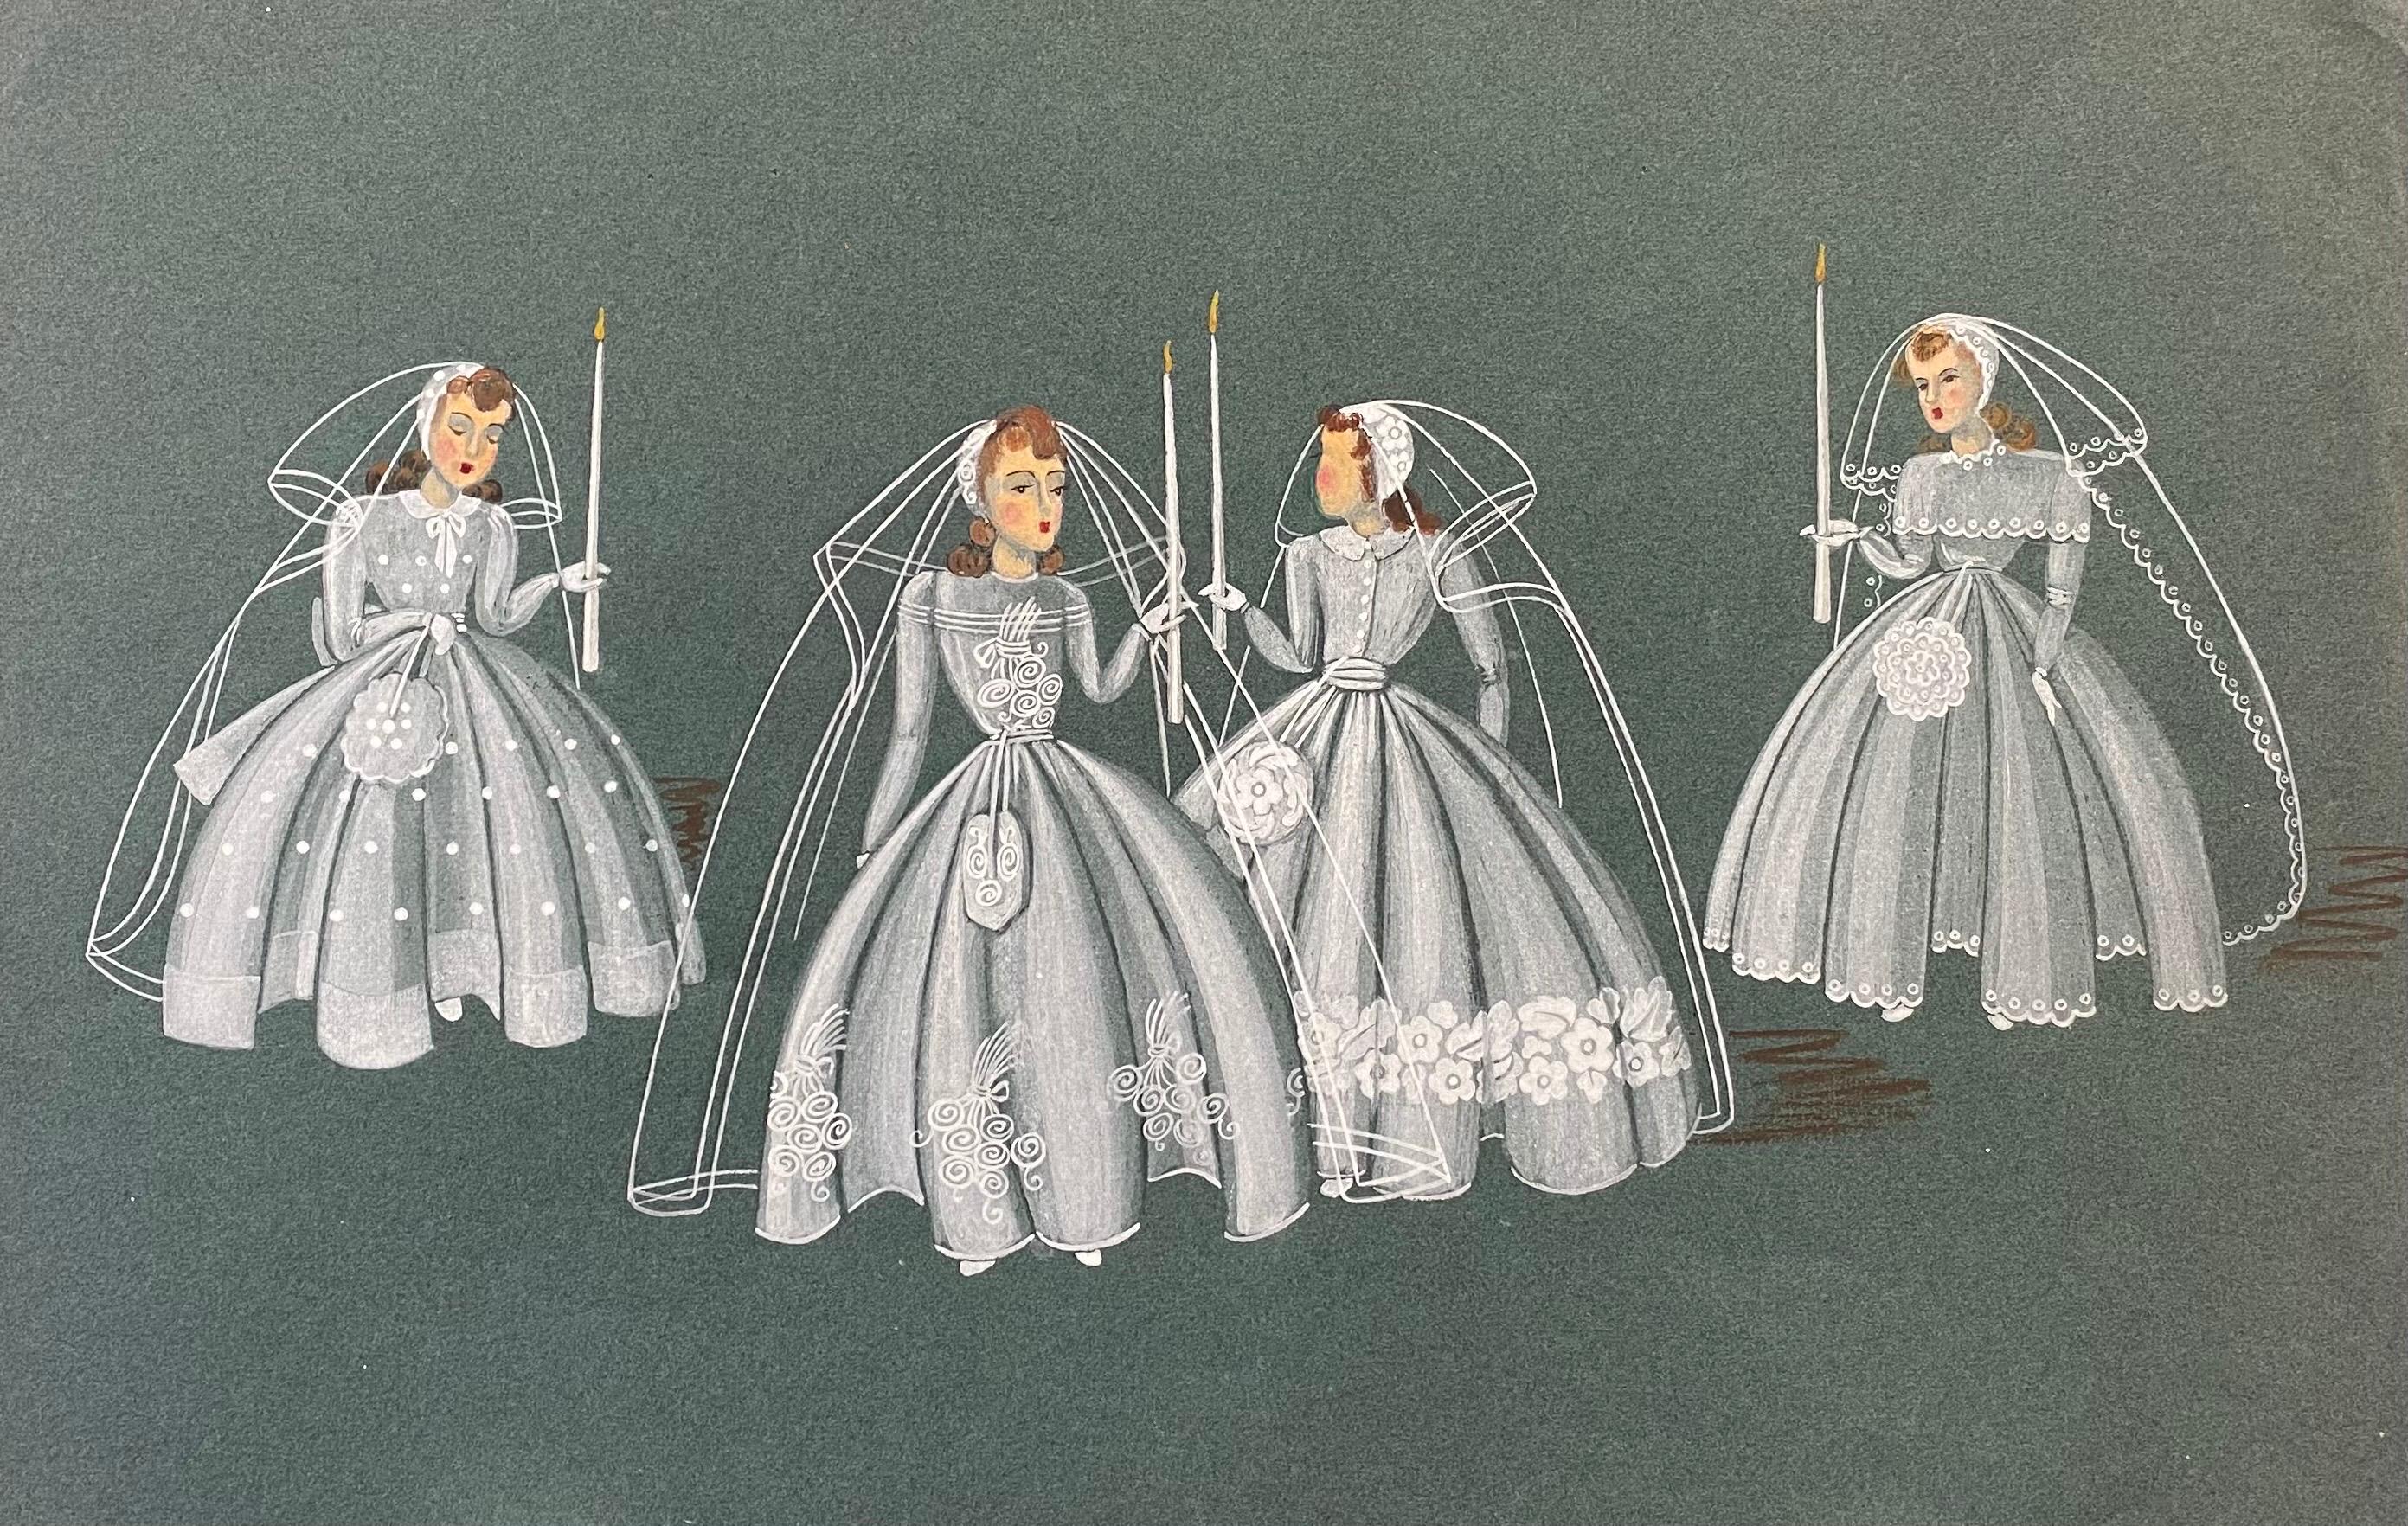 Geneviève Thomas Portrait Painting - 1940's Fashion Illustration - Four Brides Holding Candles